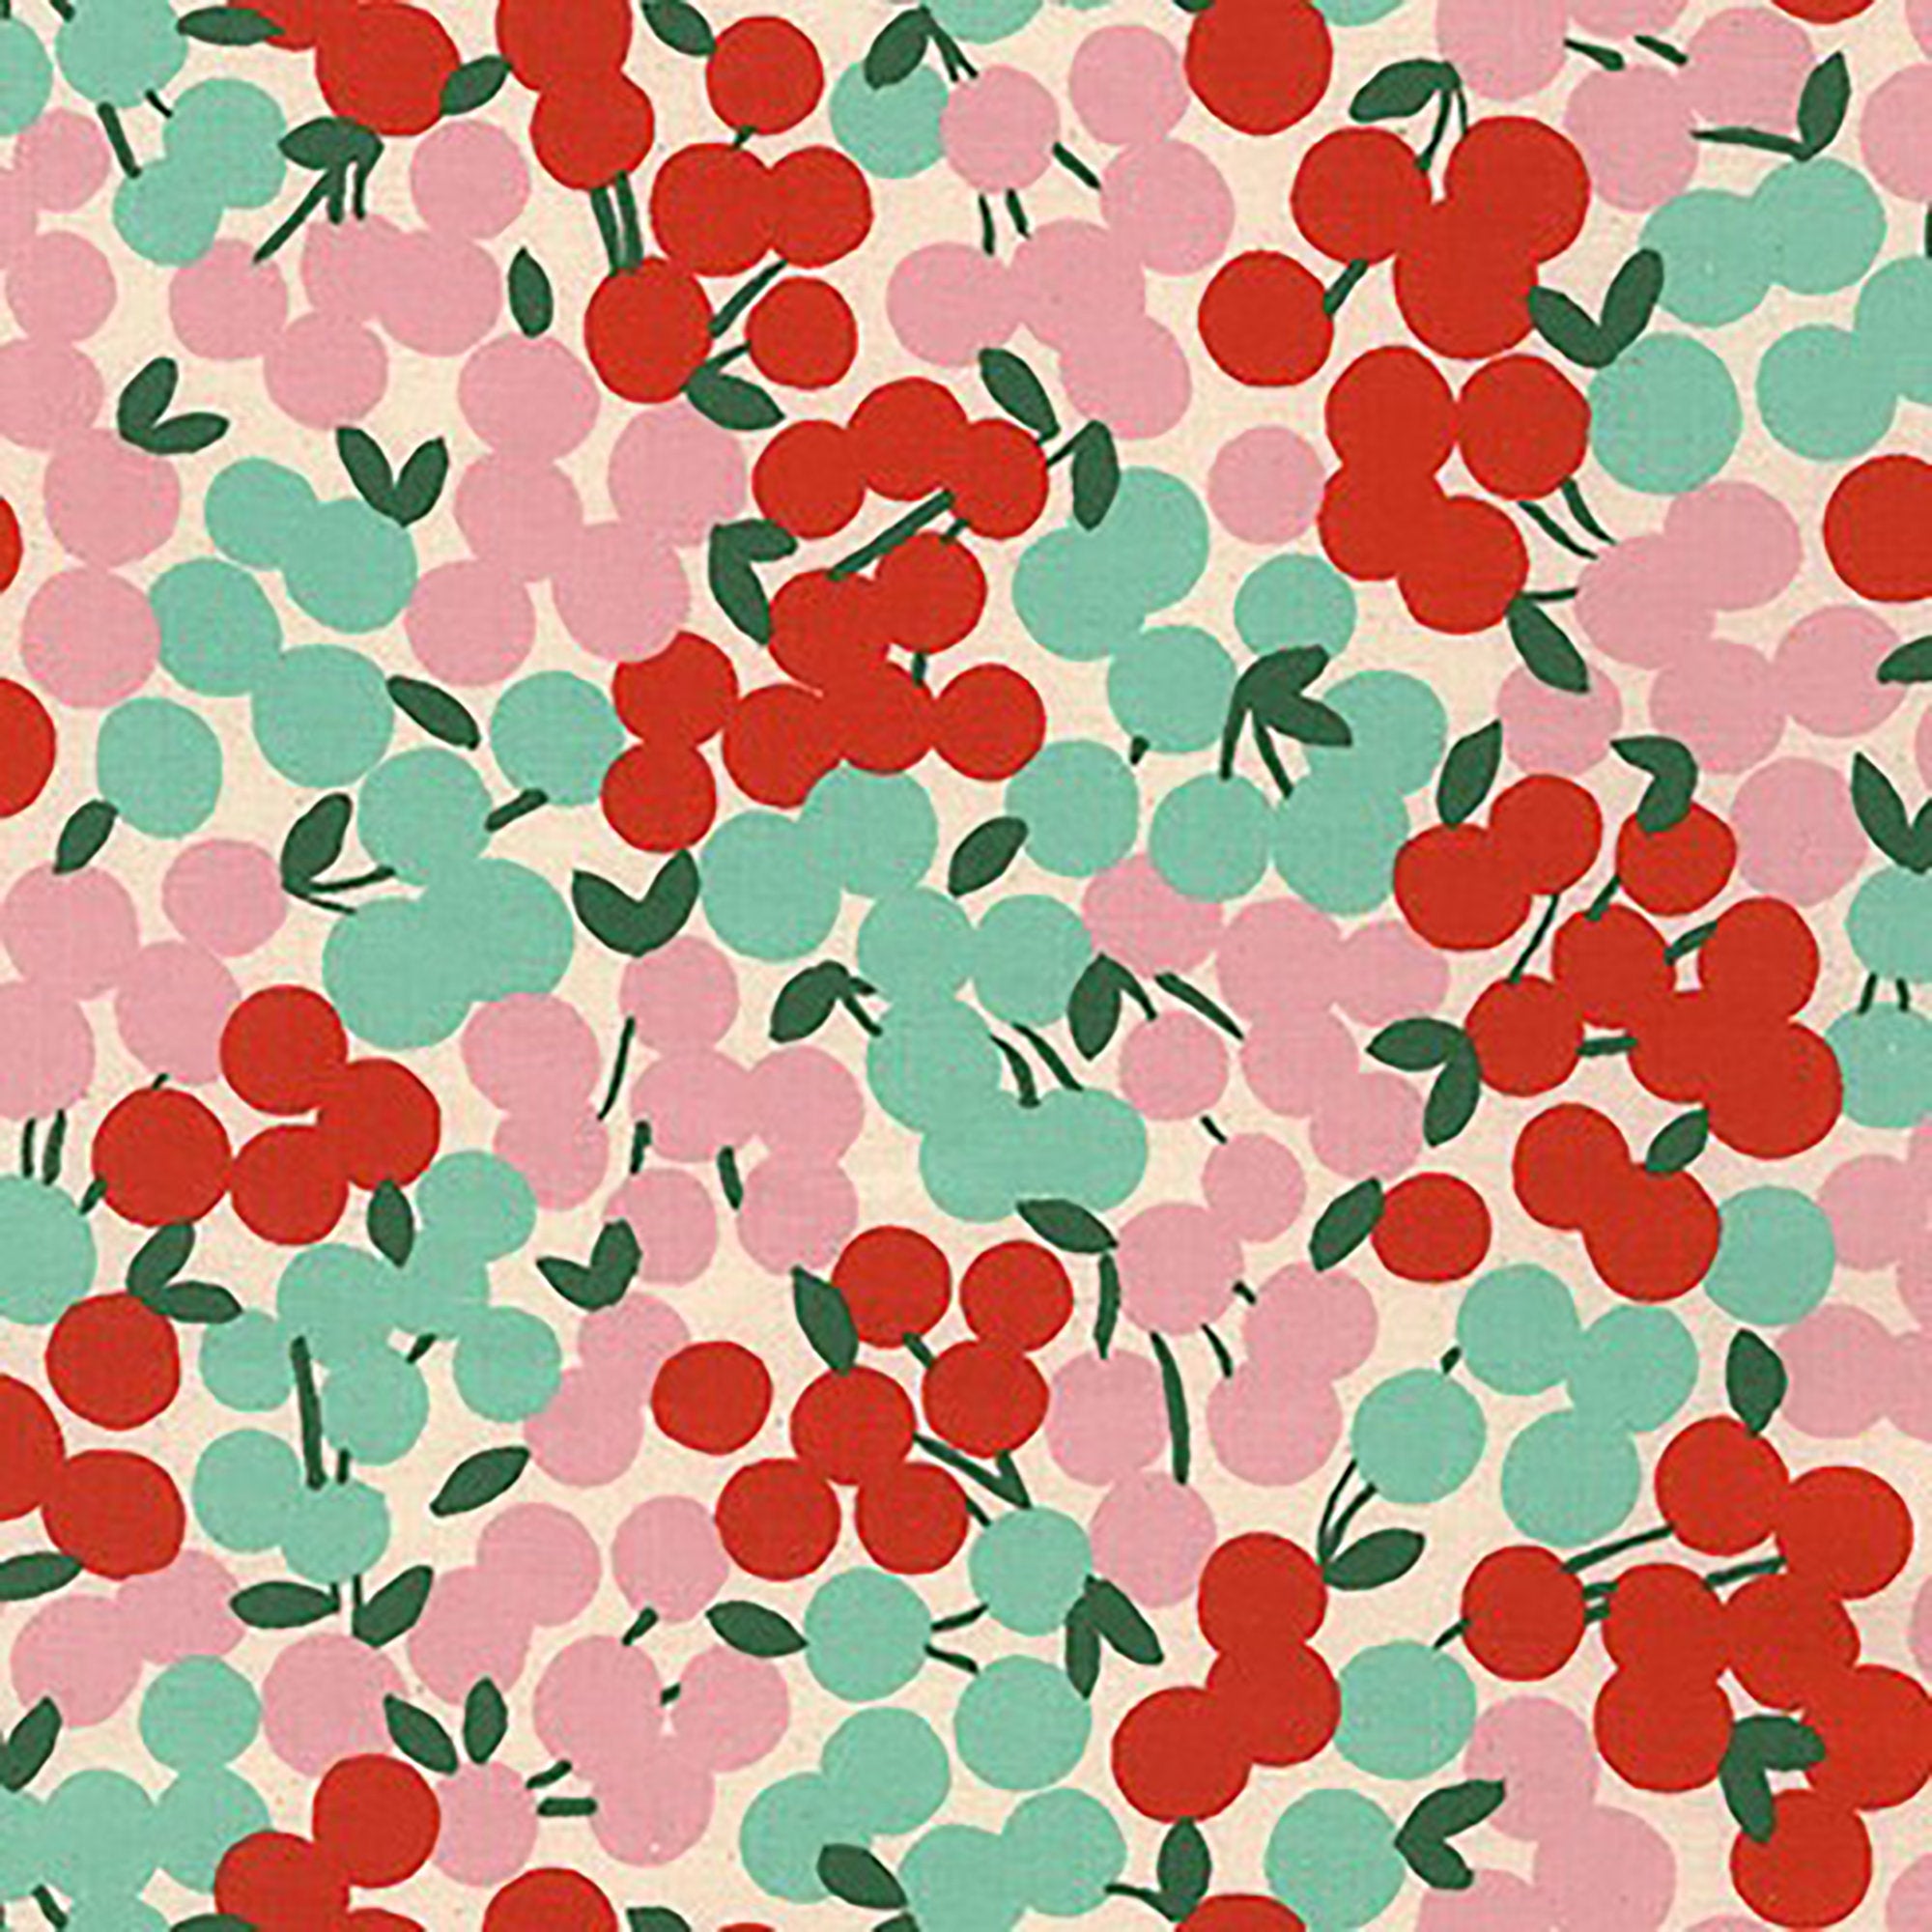 Cheery Blossom - Splatters Retro Fabric